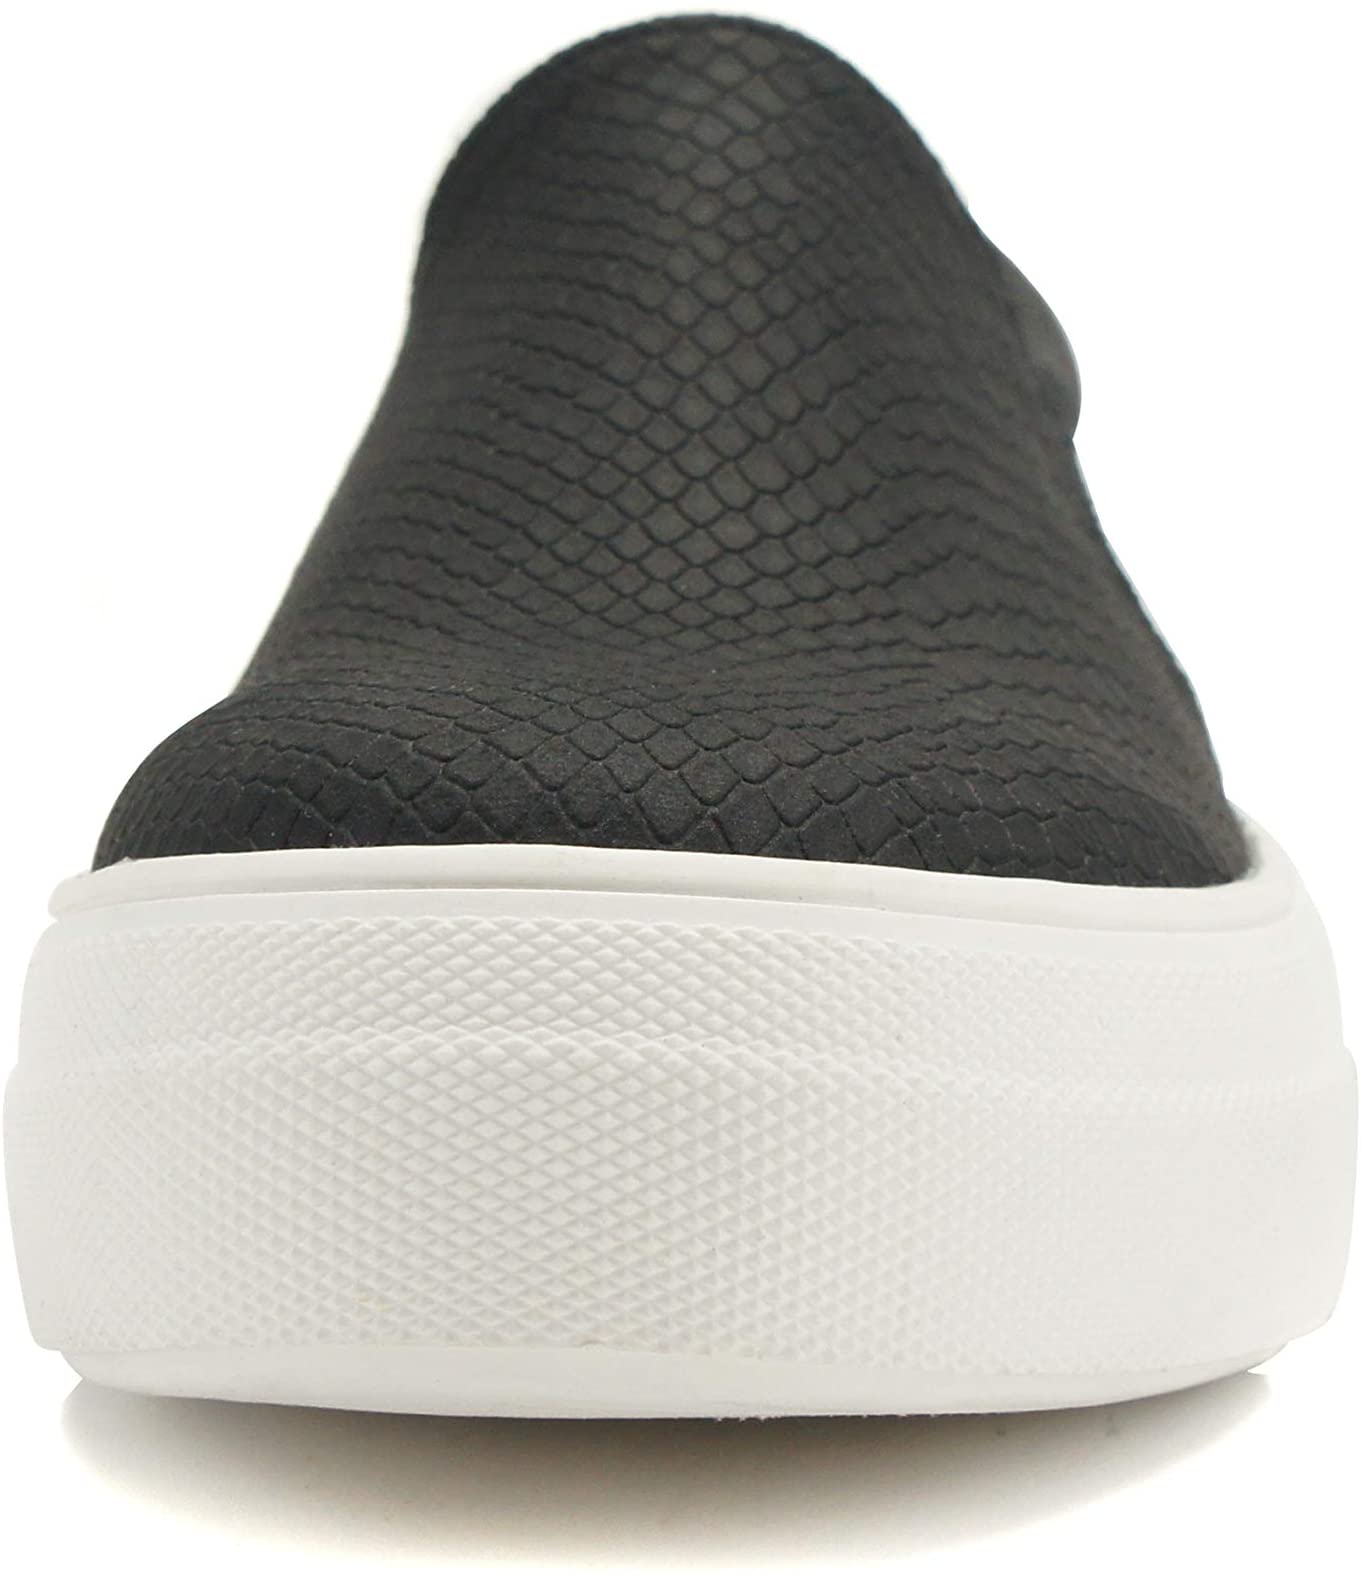 Soda Flat Women Shoes Slip On Loafers Casual Sneakers Memory Foam Insoles Hidden Platform / Flatform Round Toe HIKE-G PU Black Cobra Snake 6.5 - image 4 of 5